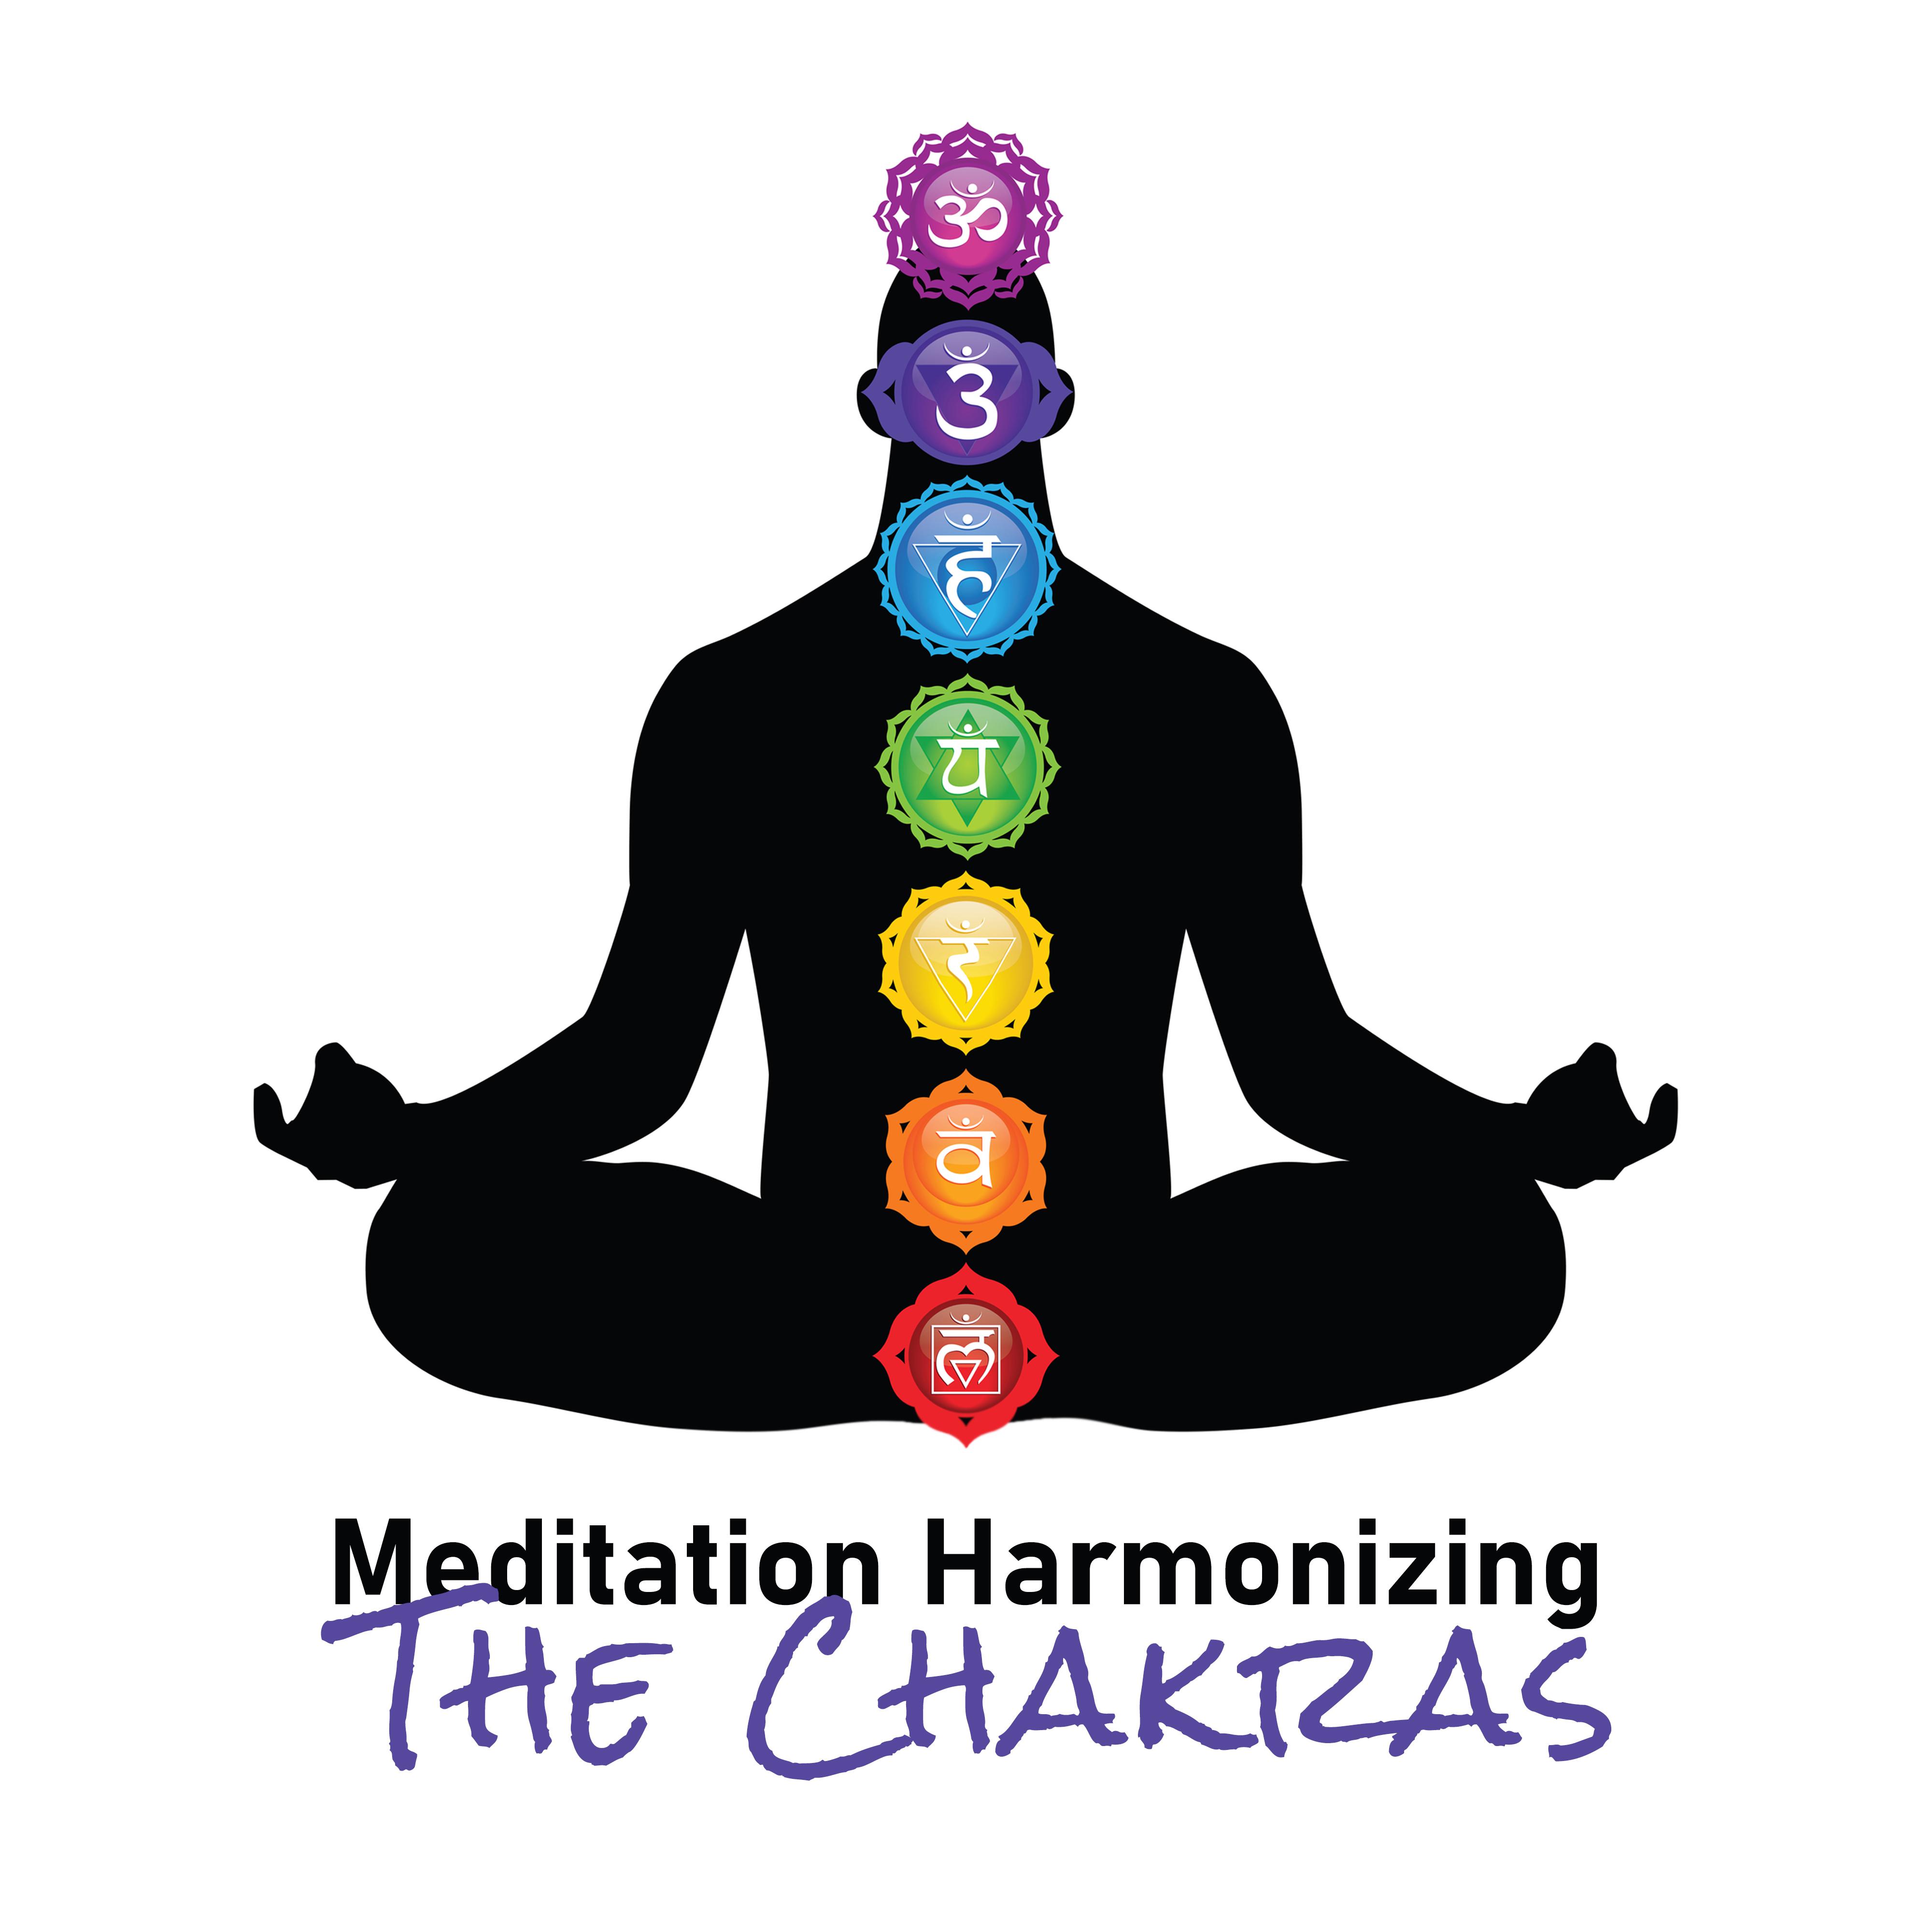 Meditation Harmonizing The Chakras: Deeply Cleansing, Balancing and Opening Closed Chakras, Meditation Music Harmonizing the Chakras